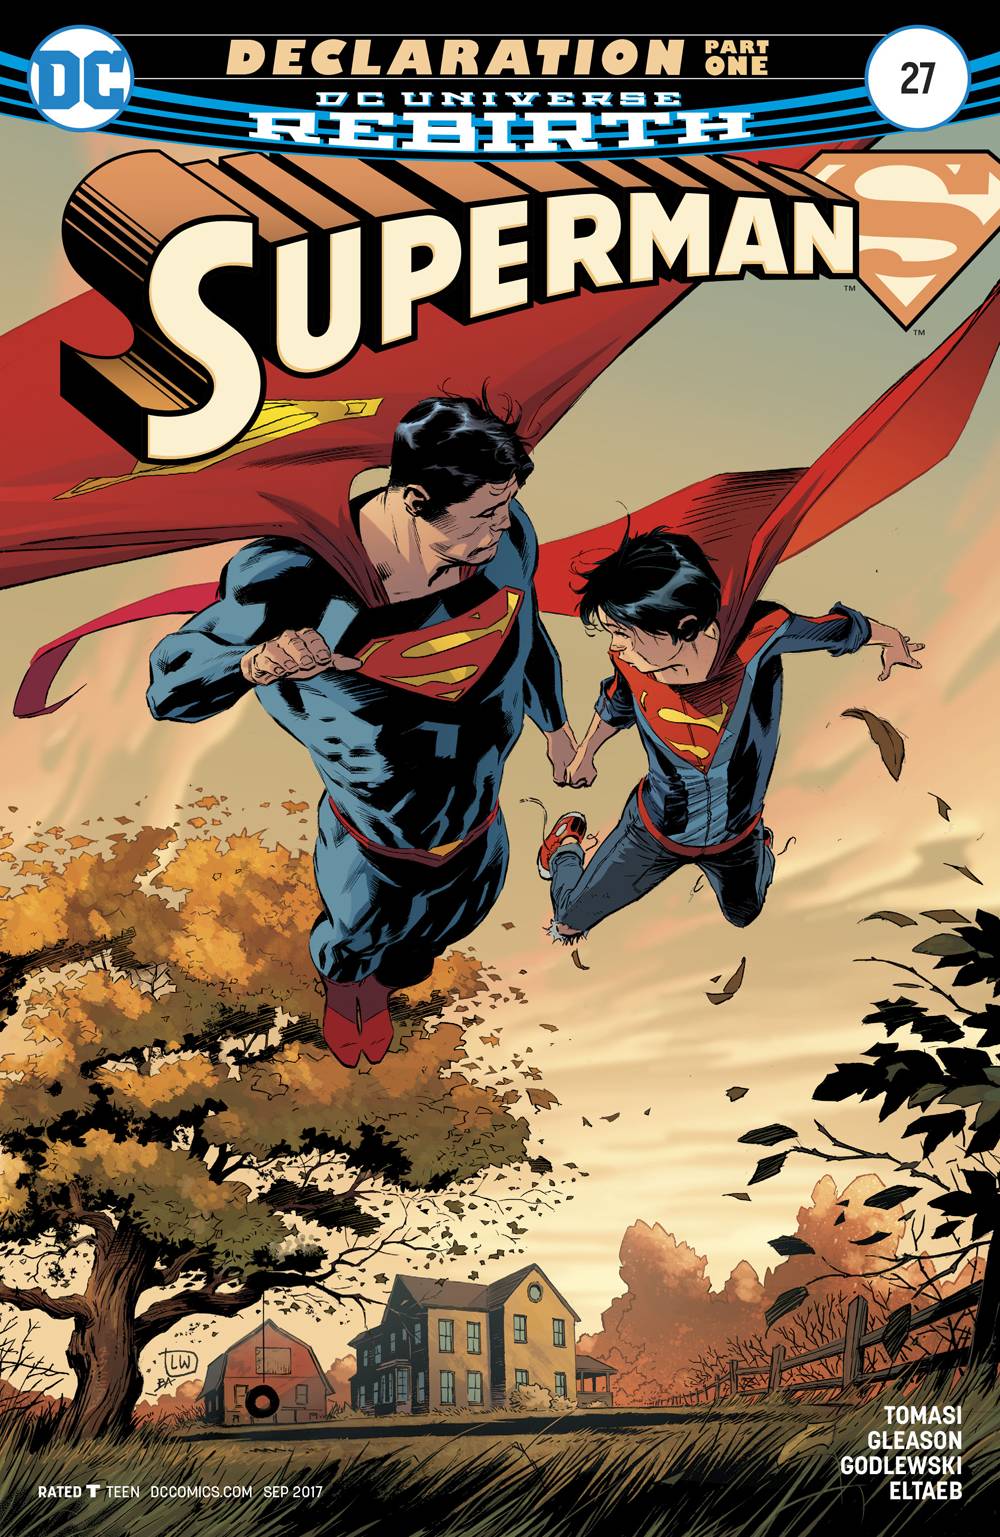 Superman #27 (2016)